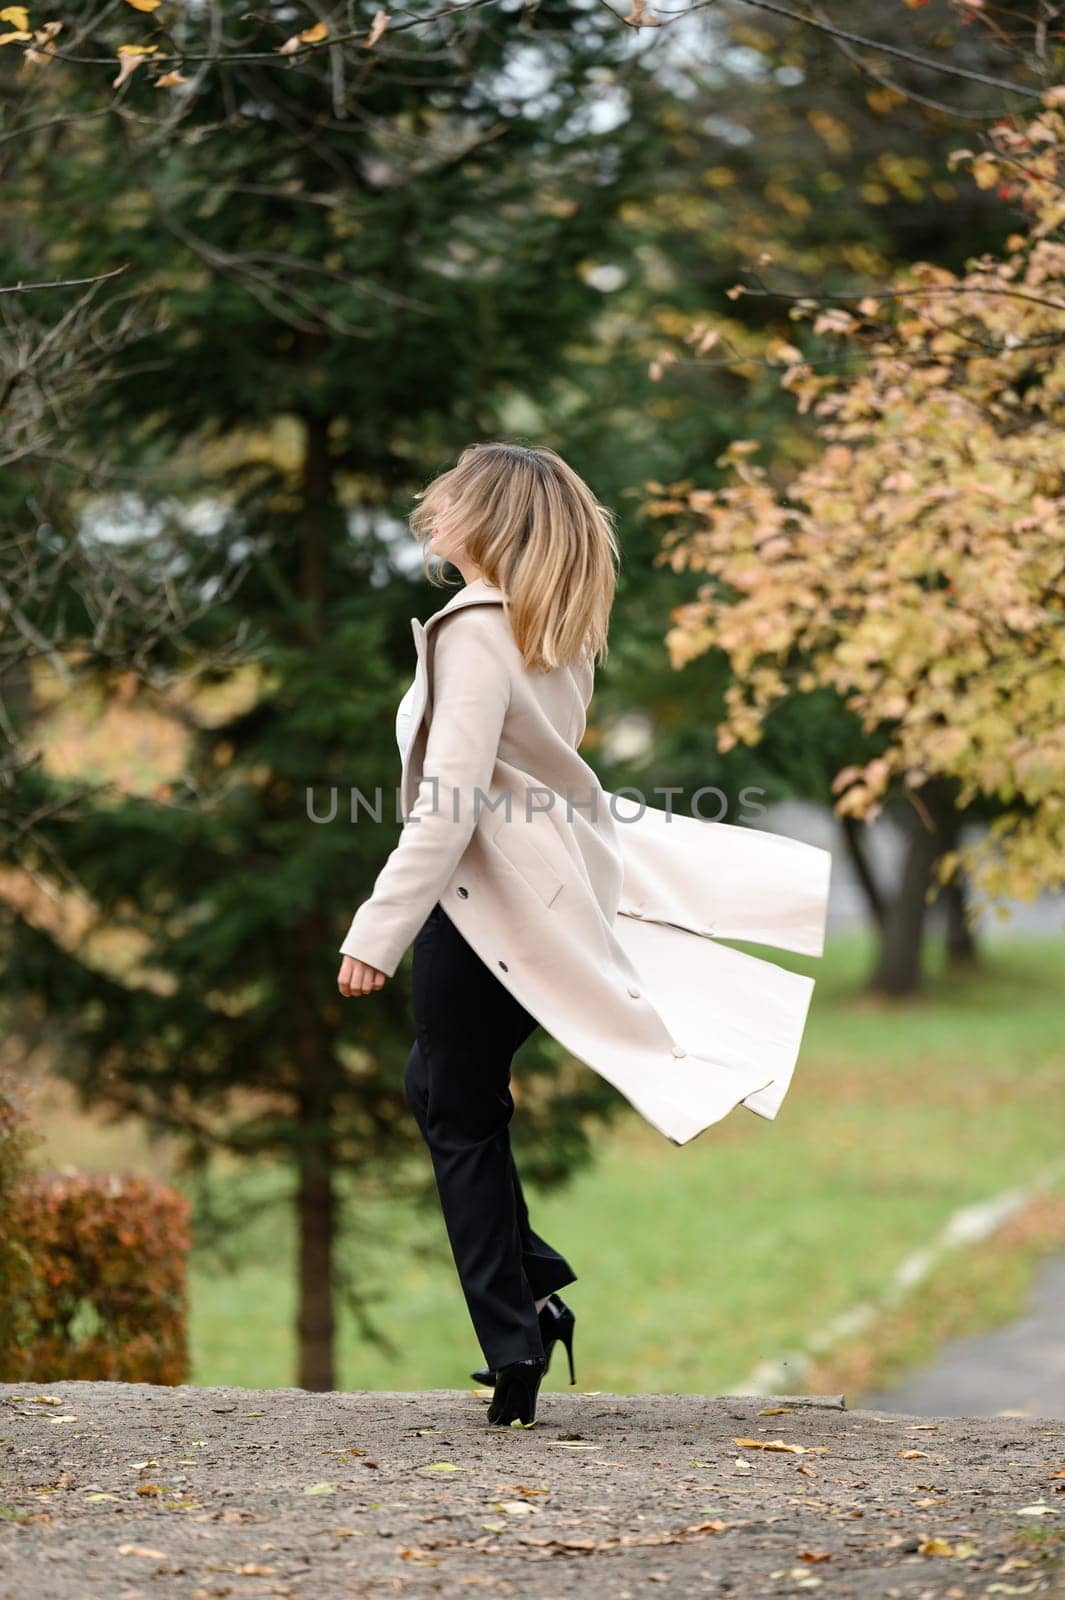 A young girl in an autumn park on a photo shoot, a theme for an autumn calendar, a happy girl in a park.